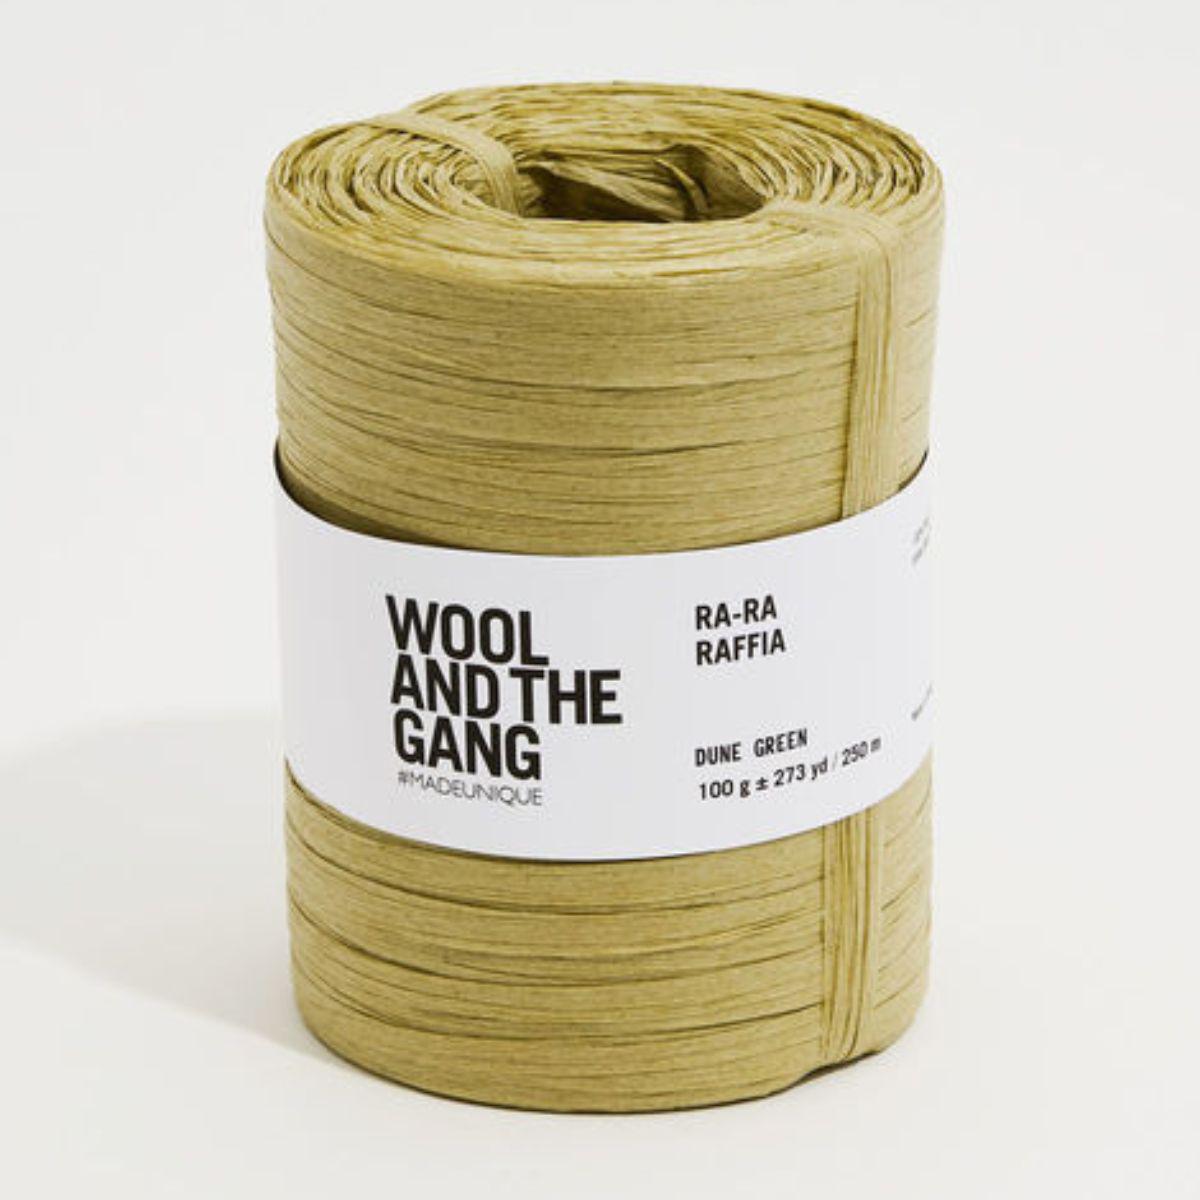 Wool and the Gang-Ra Ra Raffia-yarn-Dune Green-gather here online